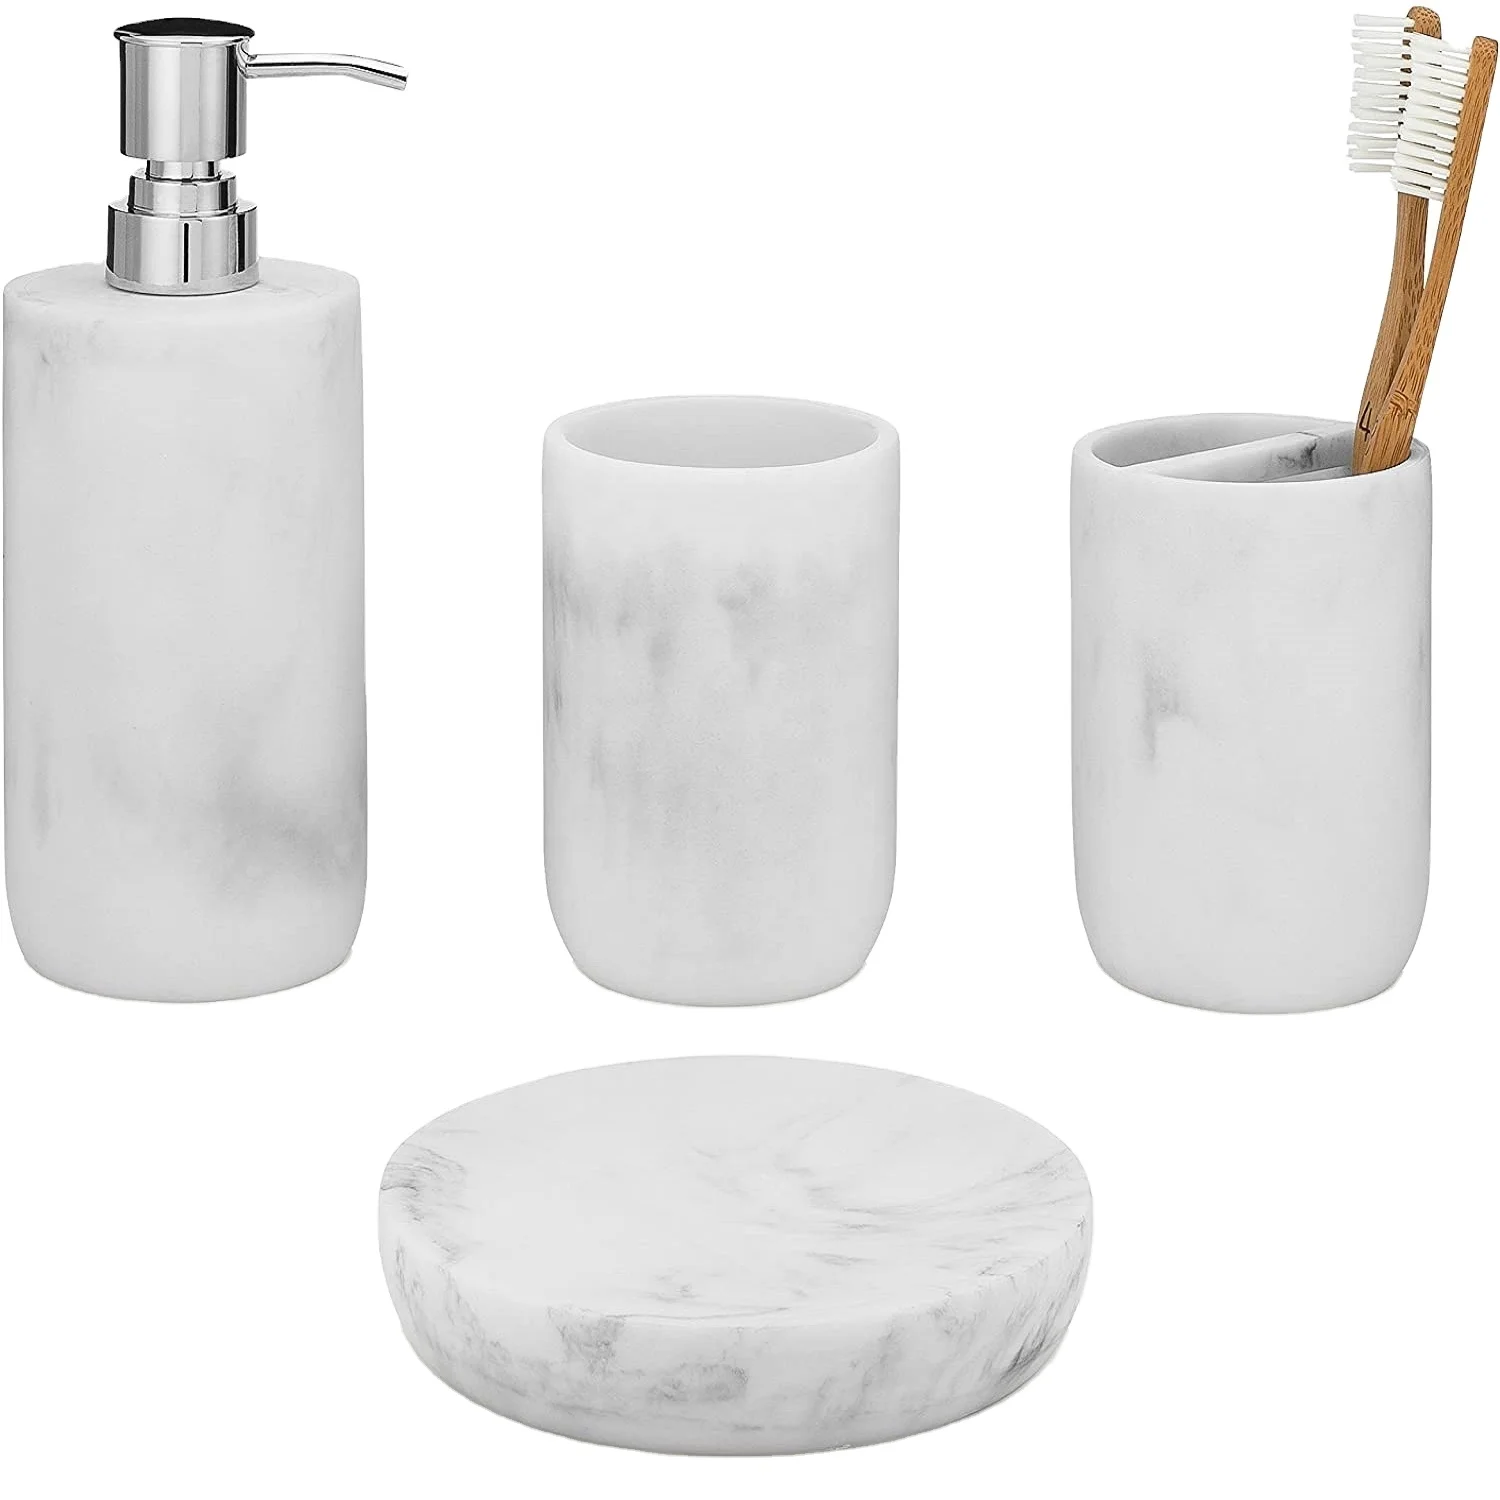 European style pure white resin bathroom accessories bath set